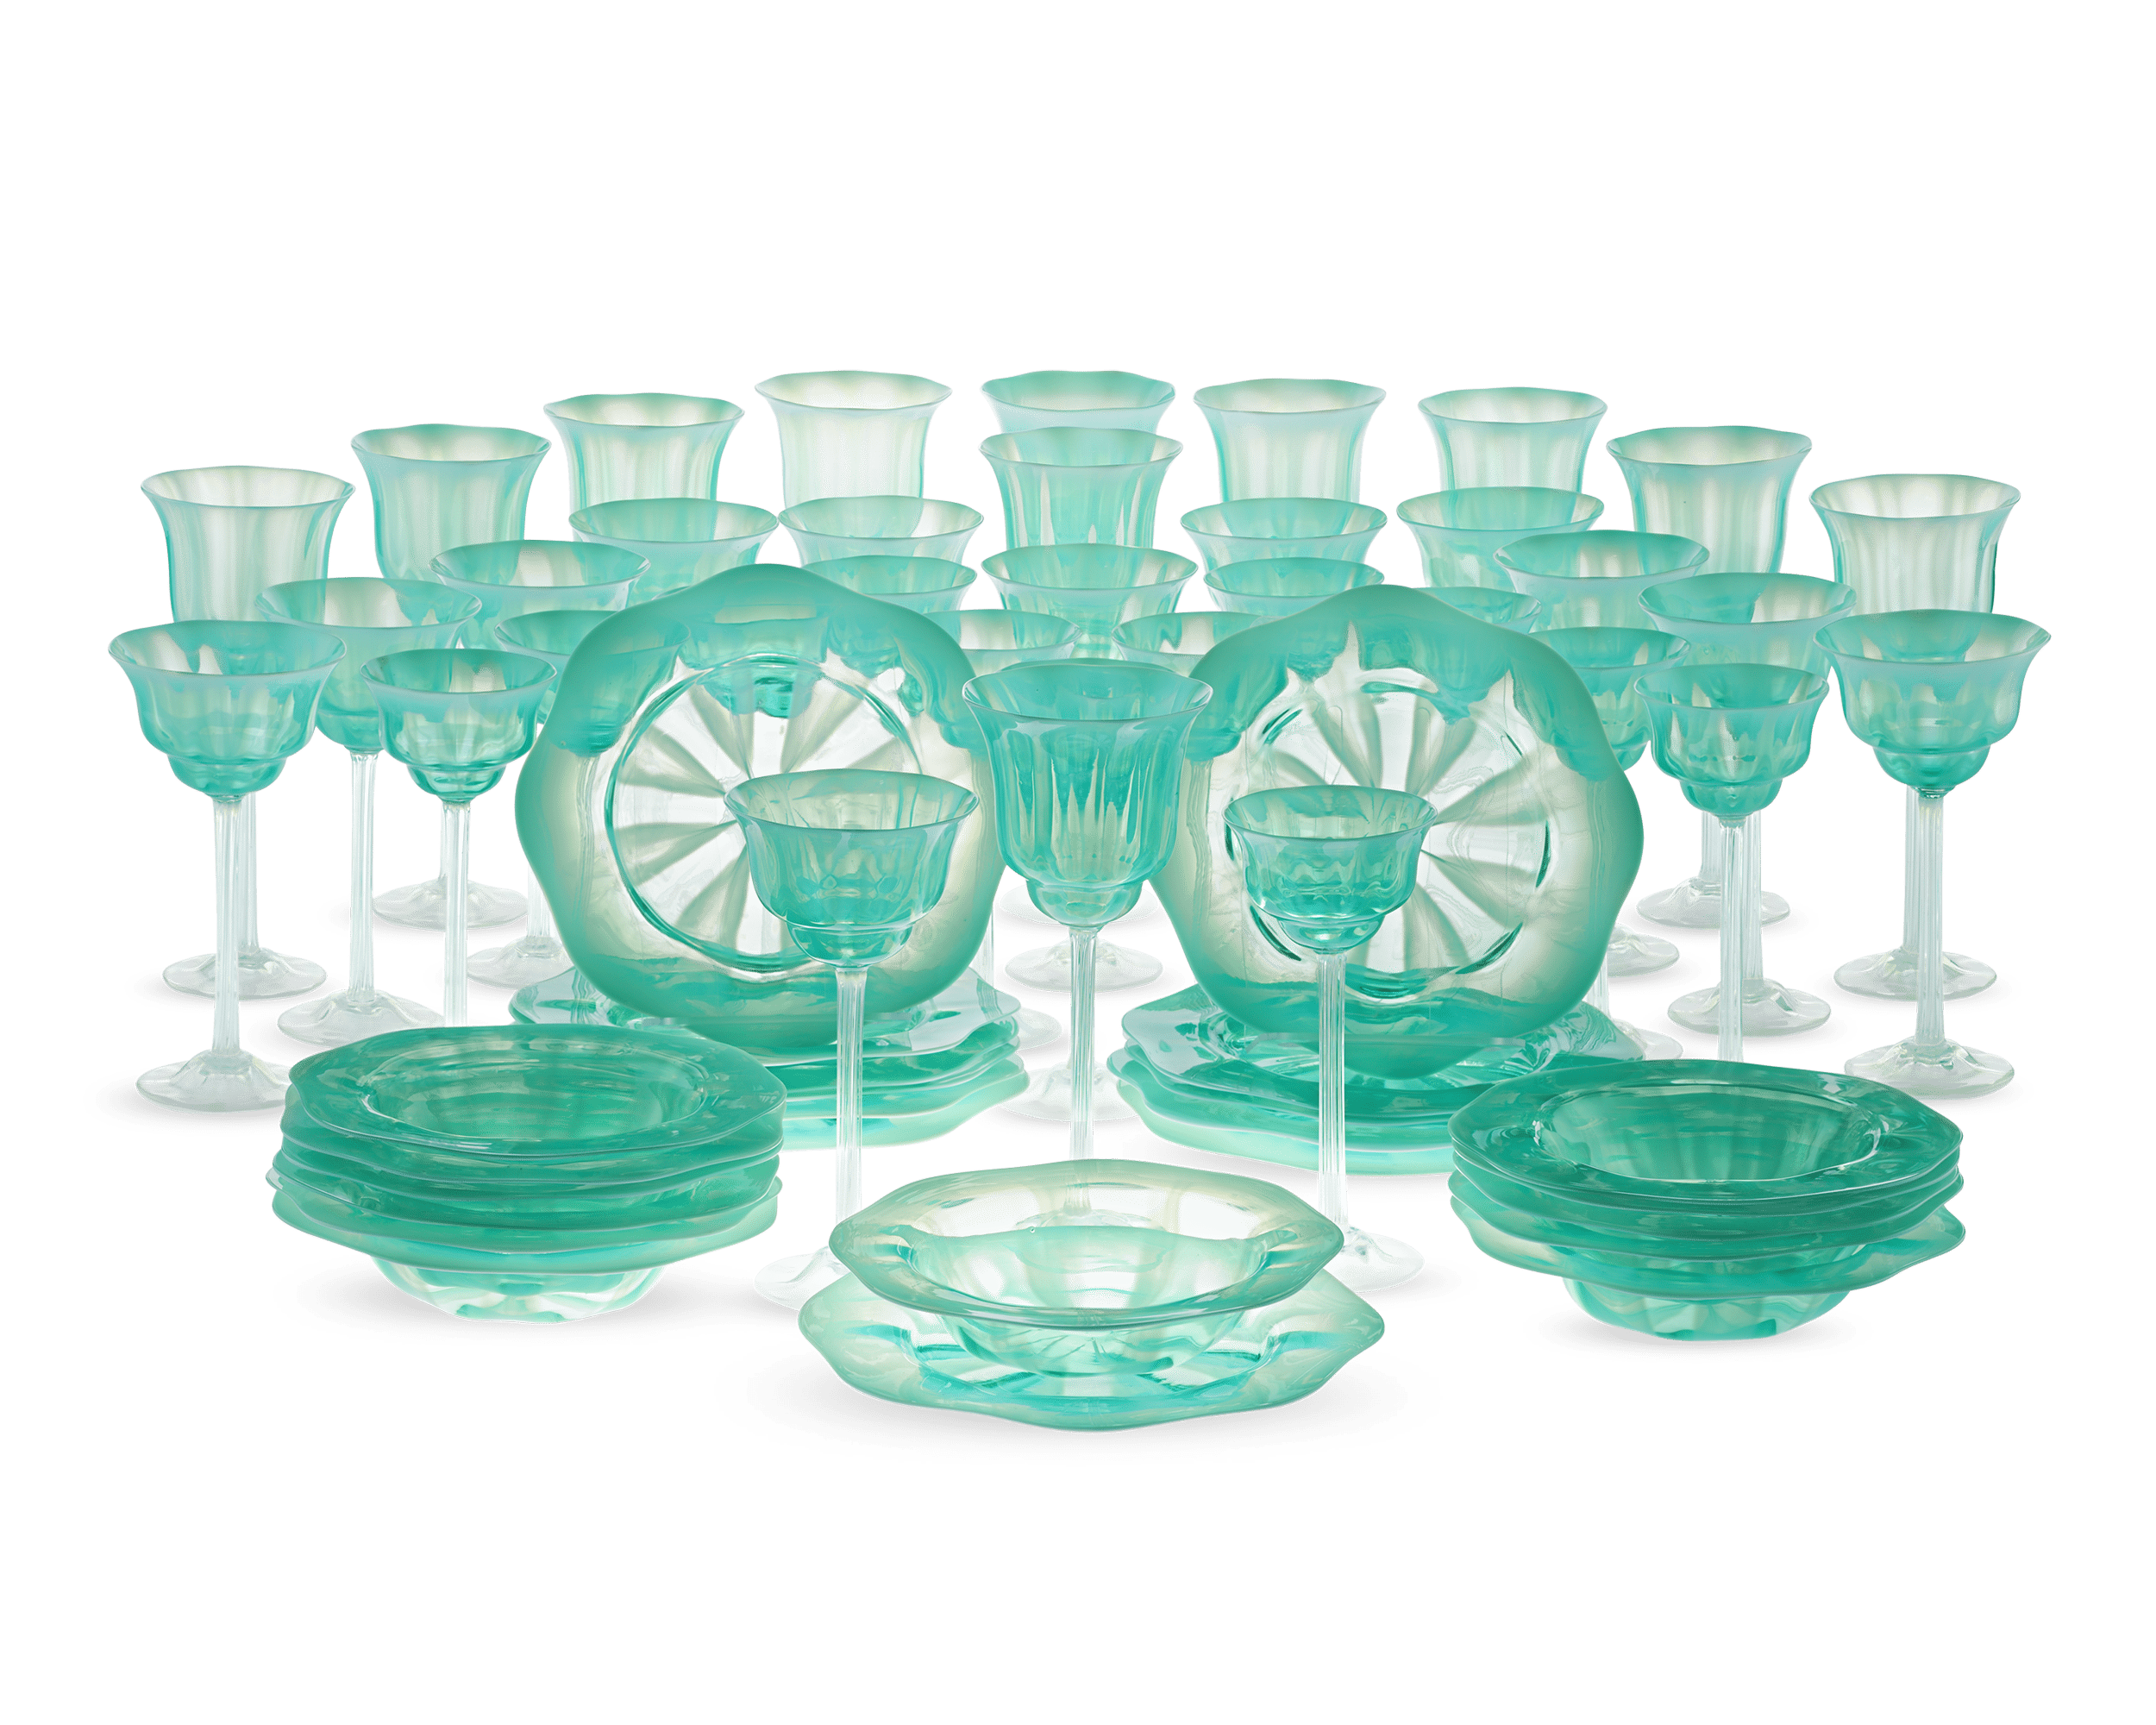 Louis Comfort Tiffany Pastel Favrile Glass Dinnerware